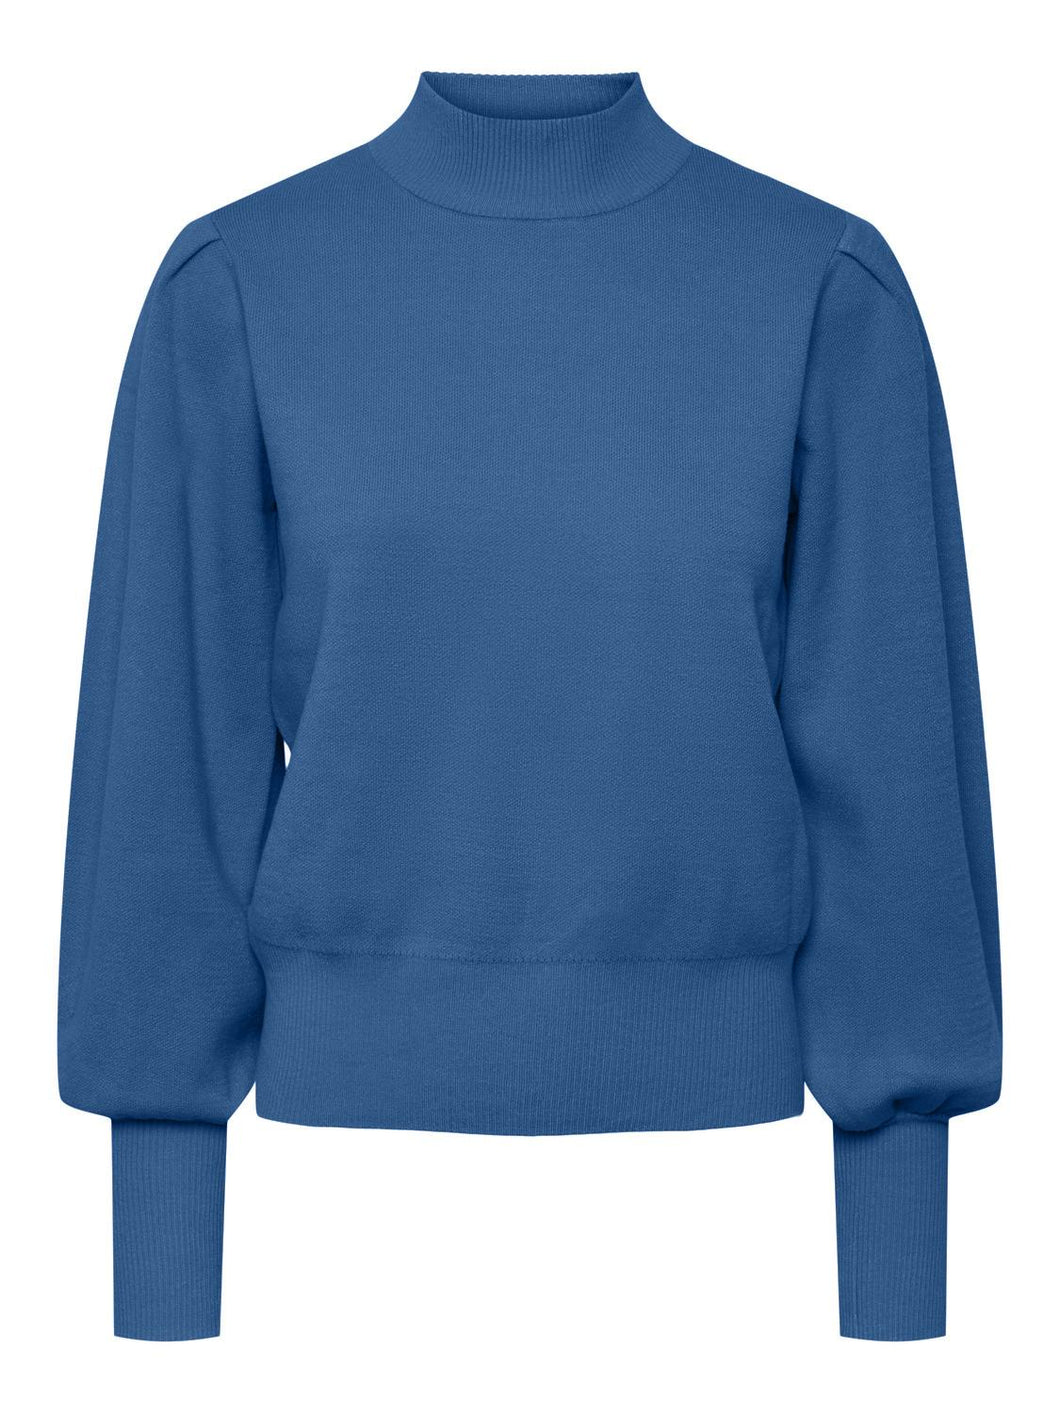 YASFONNY Knit Pullover, federal blue